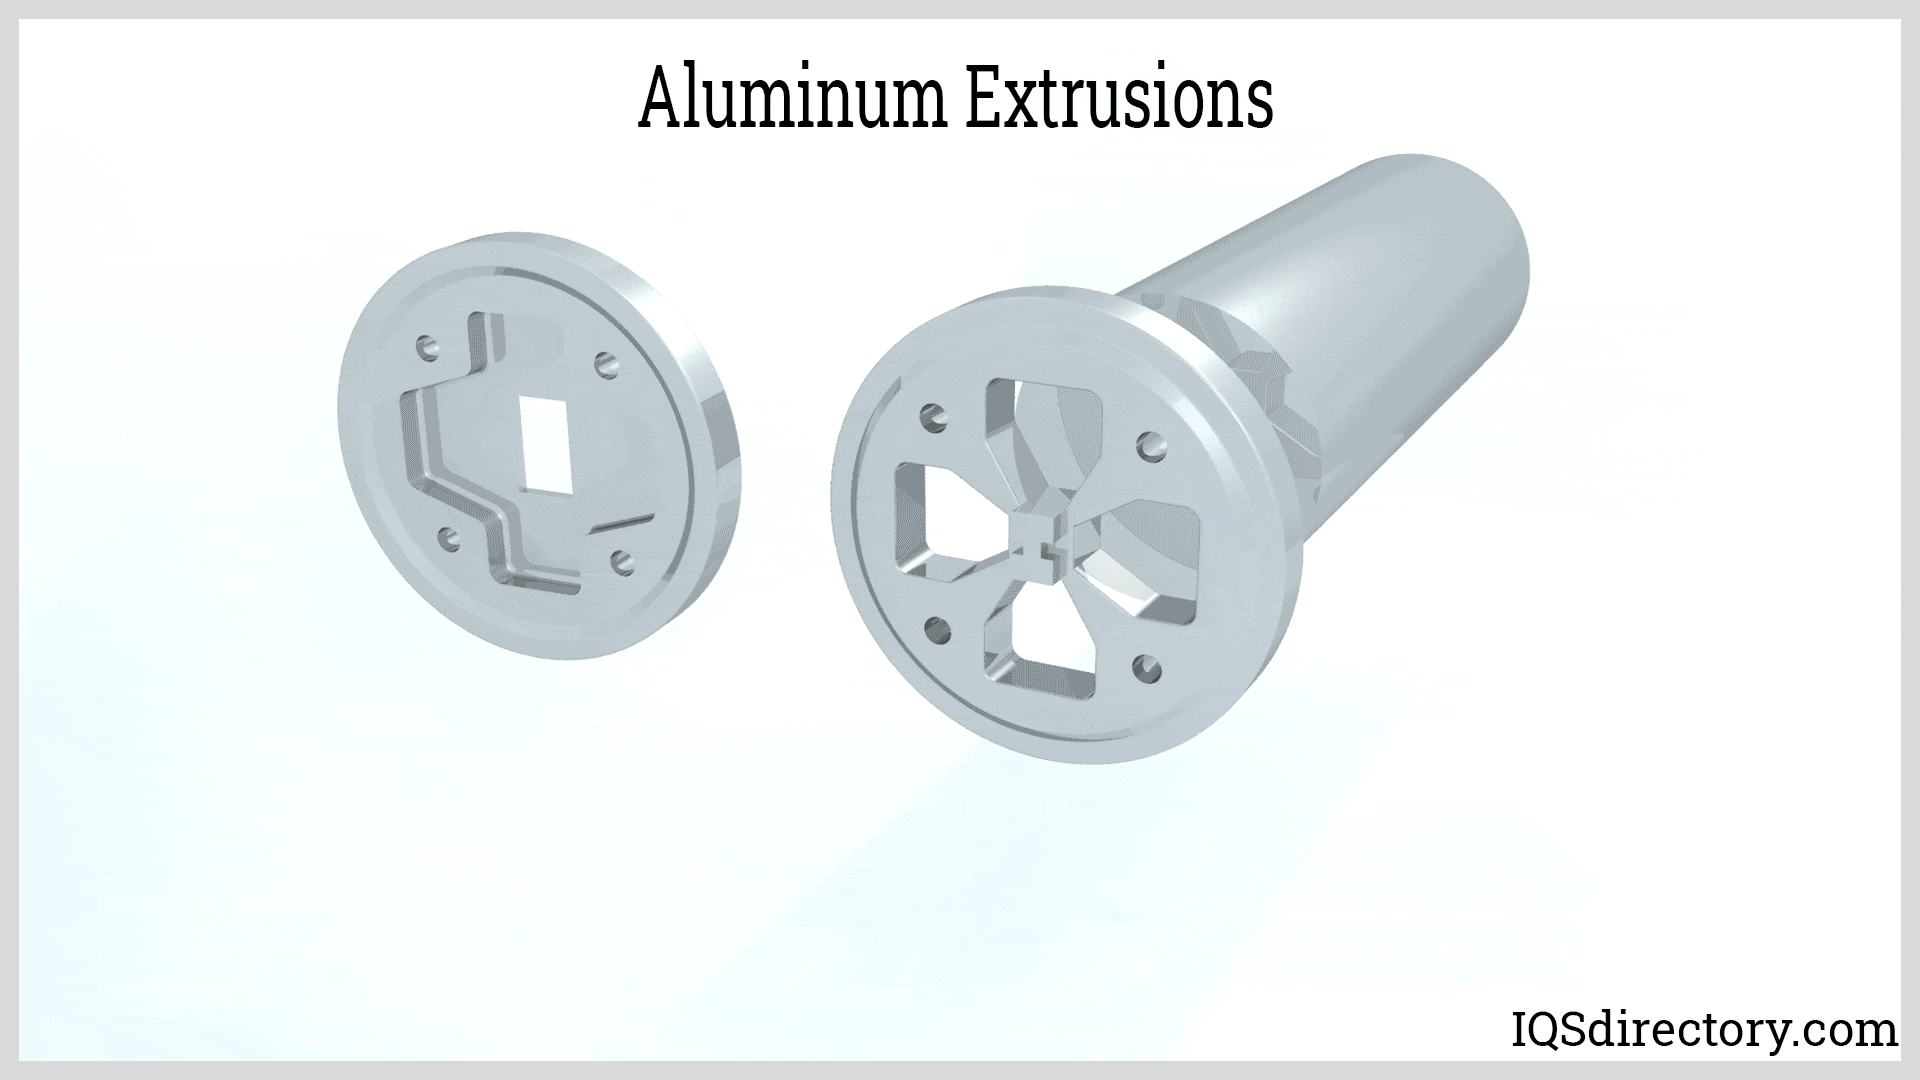 https://www.iqsdirectory.com/articles/aluminum-extrusion/extruded-aluminium-animation.gif